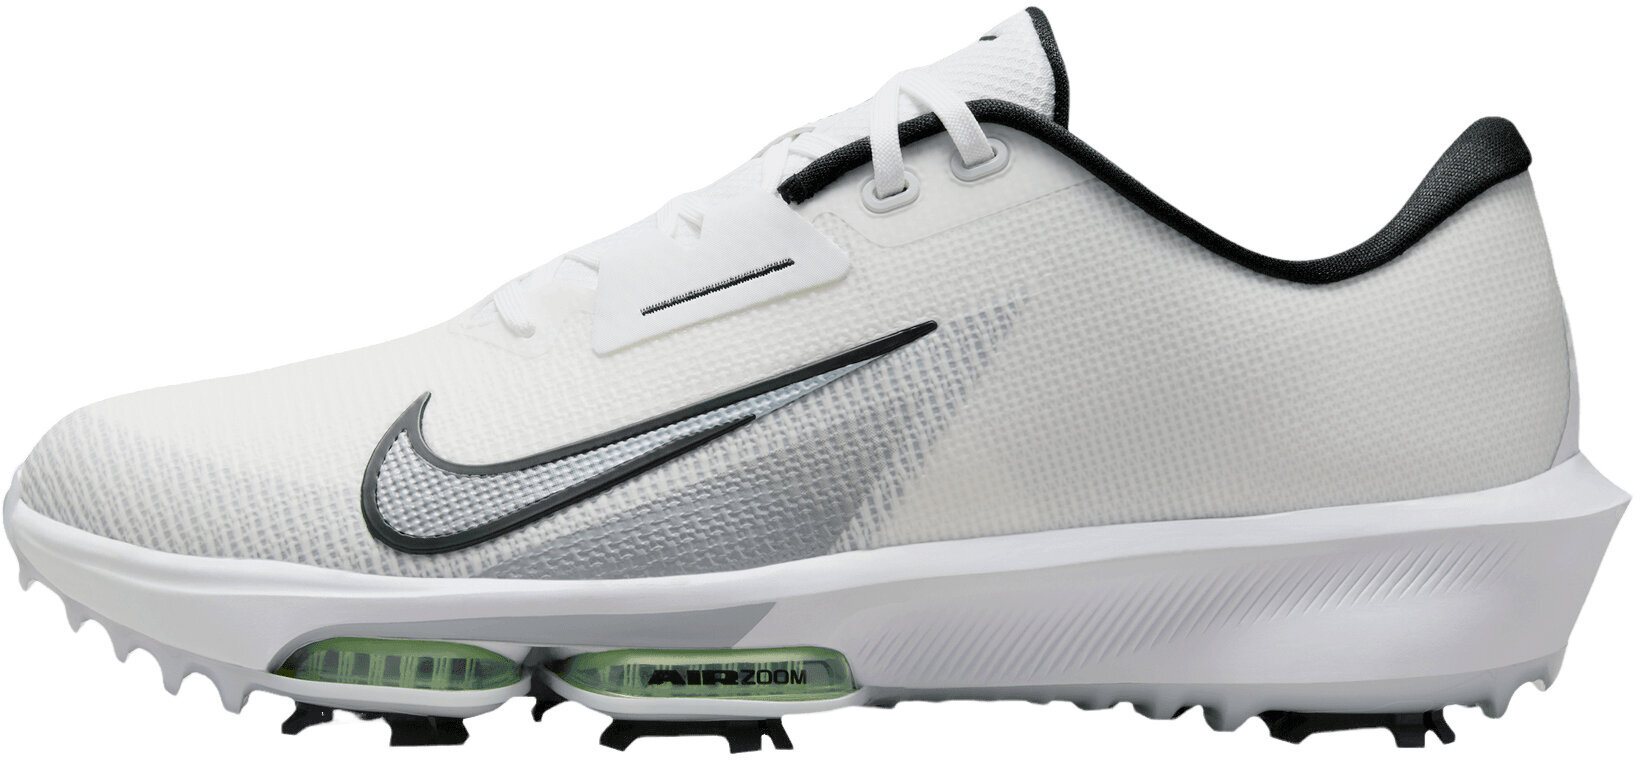 Nike Air Zoom Infinity Tour Next 2 Unisex Golf Shoes White/Black/Vapor Green/Pure Platinum 42